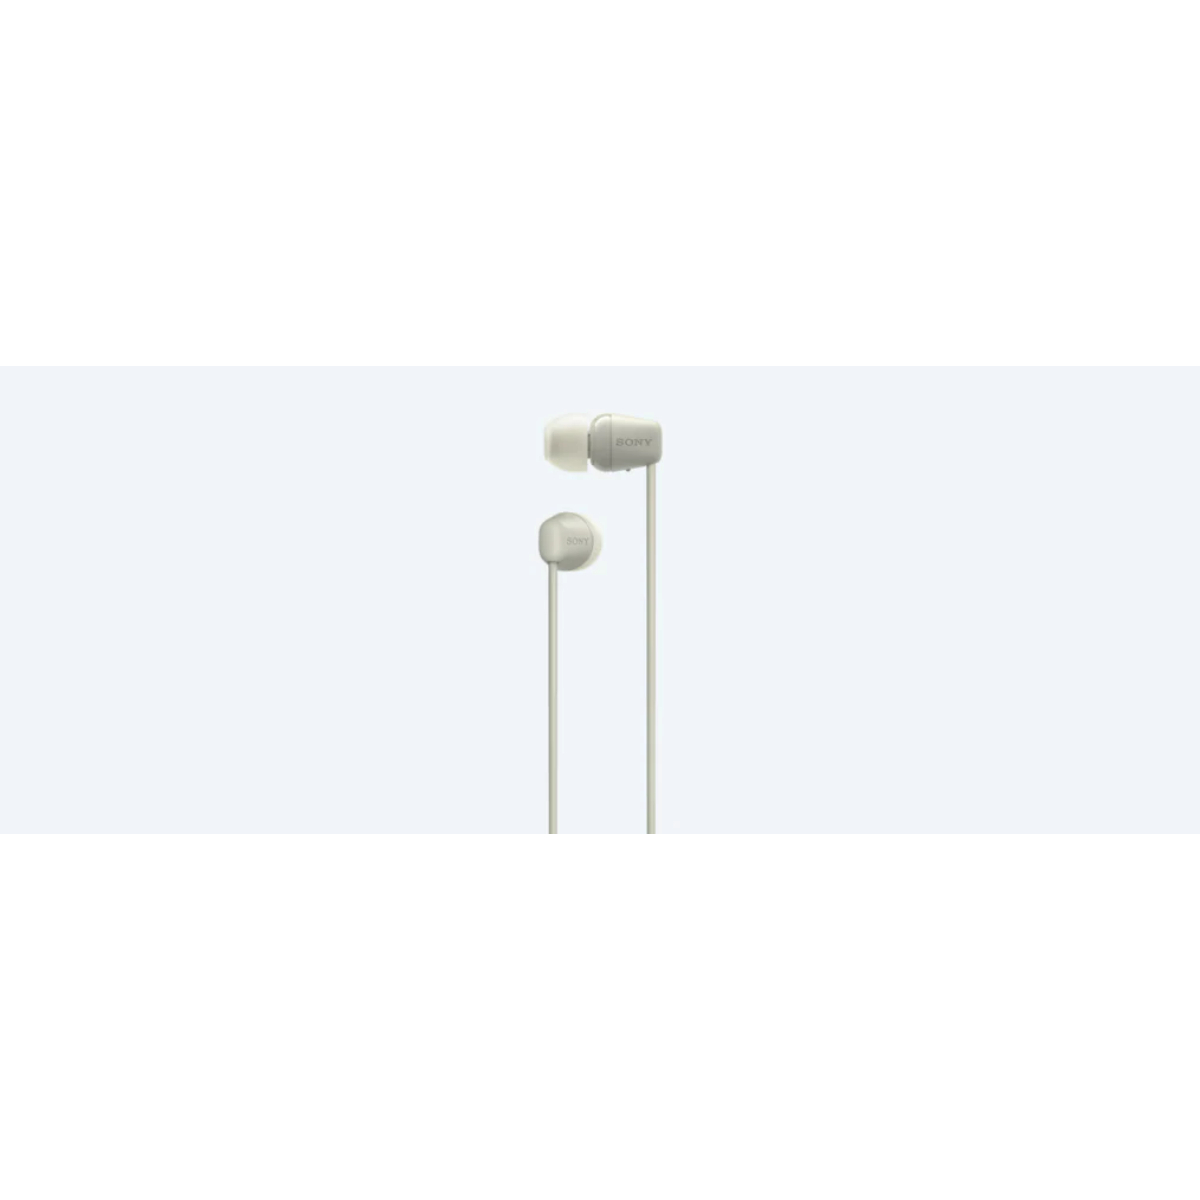 Sony WI-C100 Wireless In-ear Headphones (Cream color)